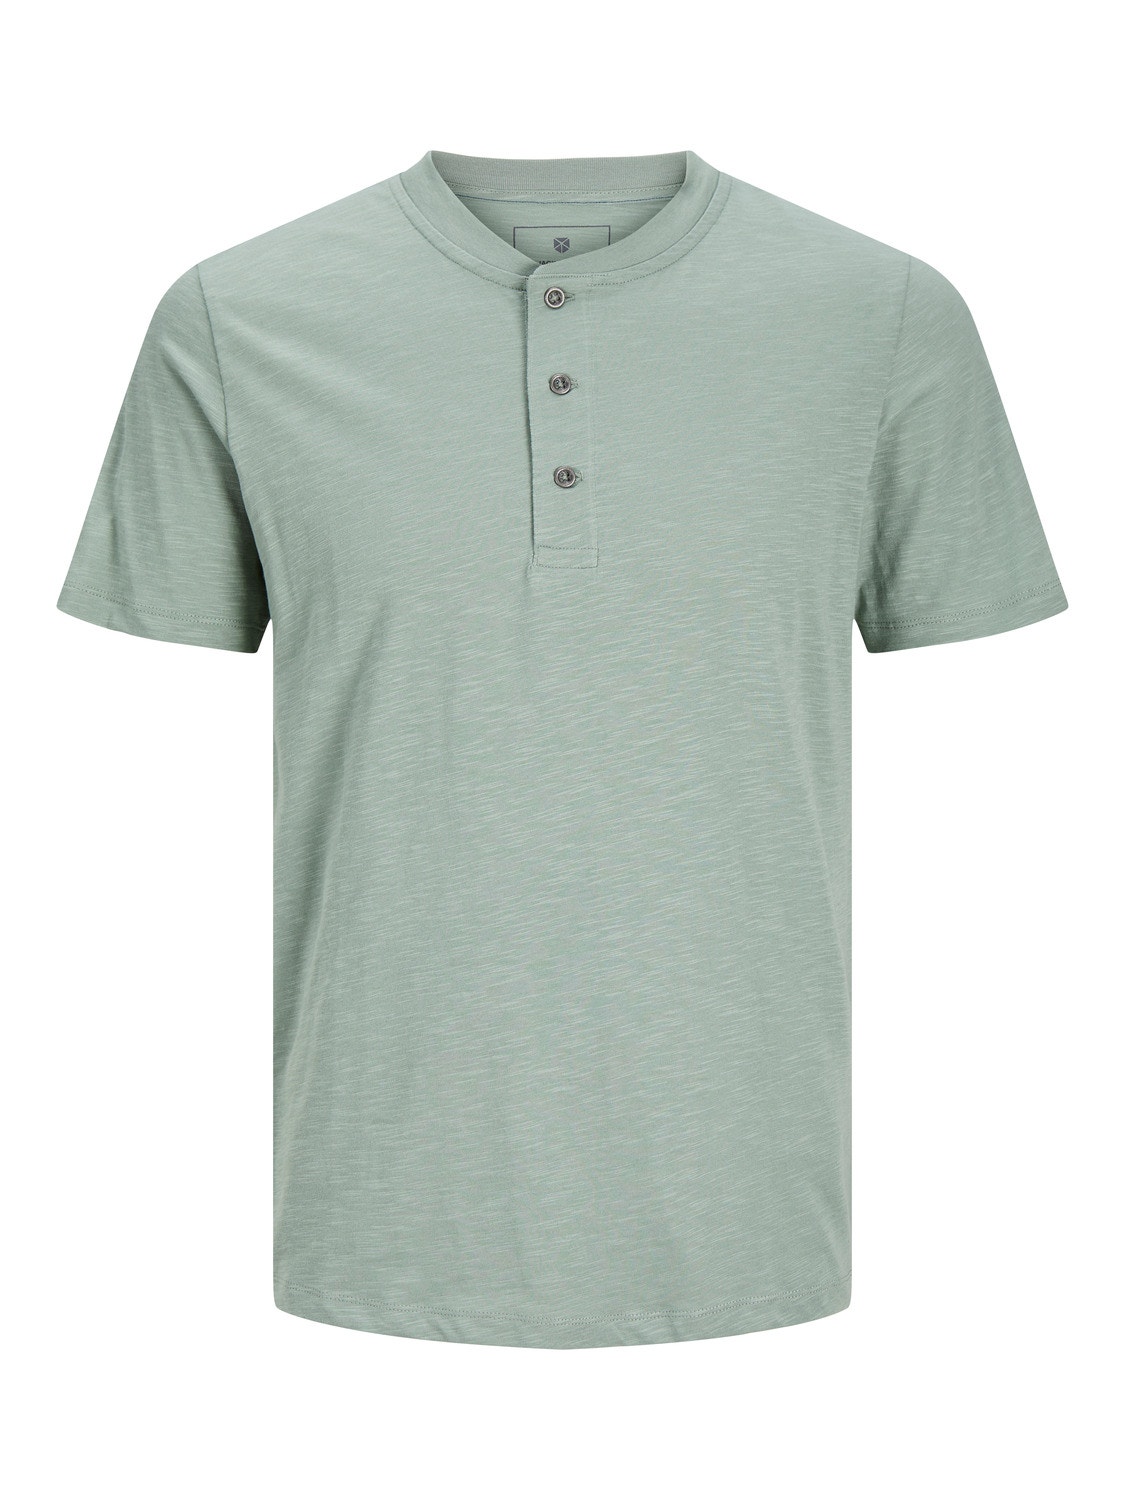 Jack & Jones Plain China Collar T-shirt -Lily Pad - 12257965